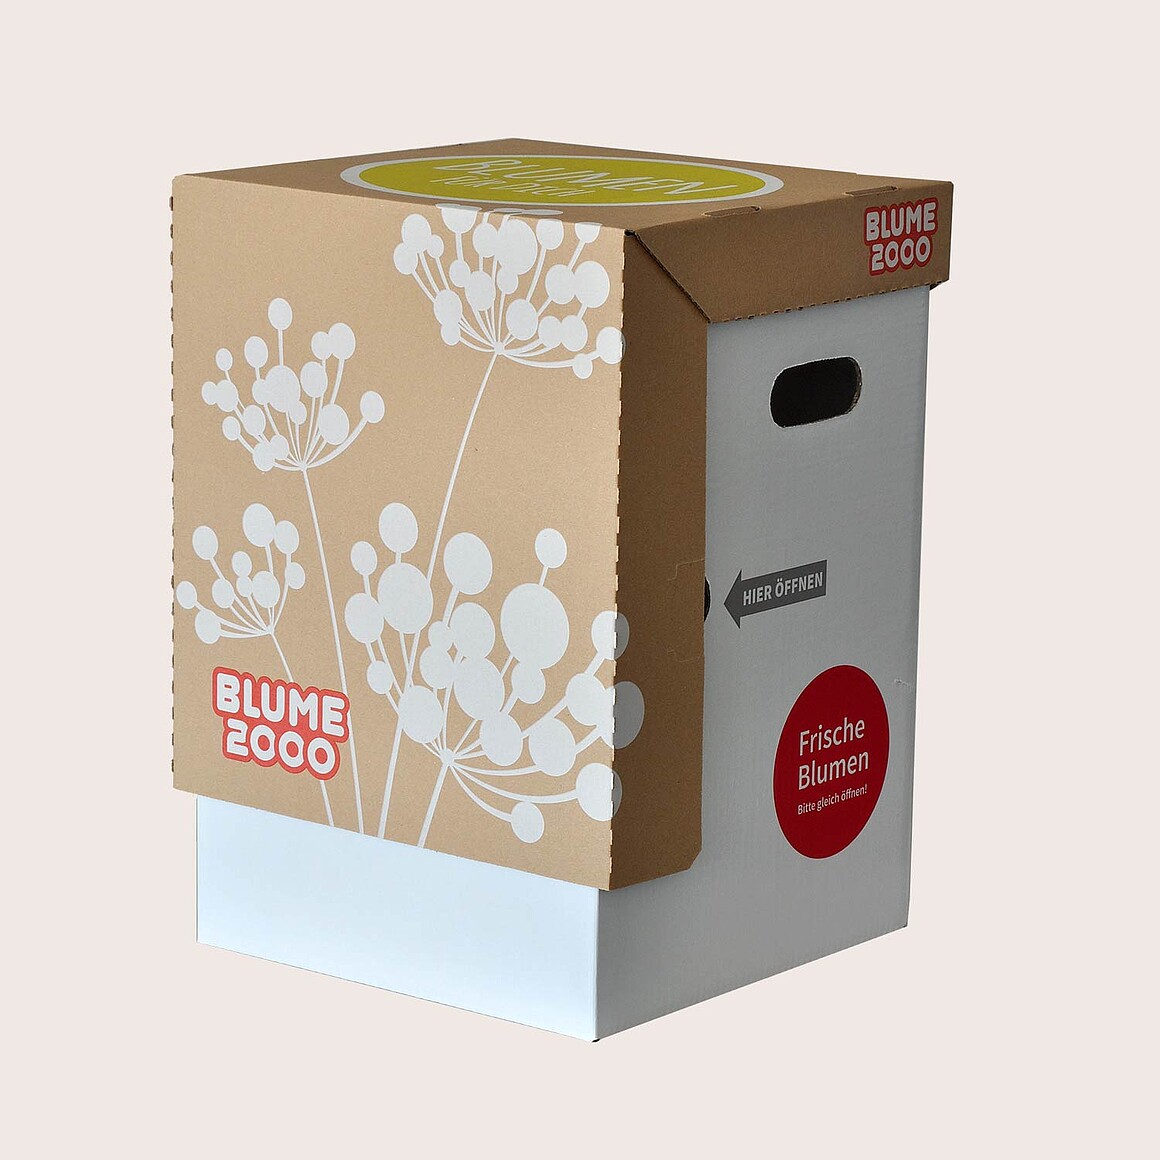 Flower packaging for shipping